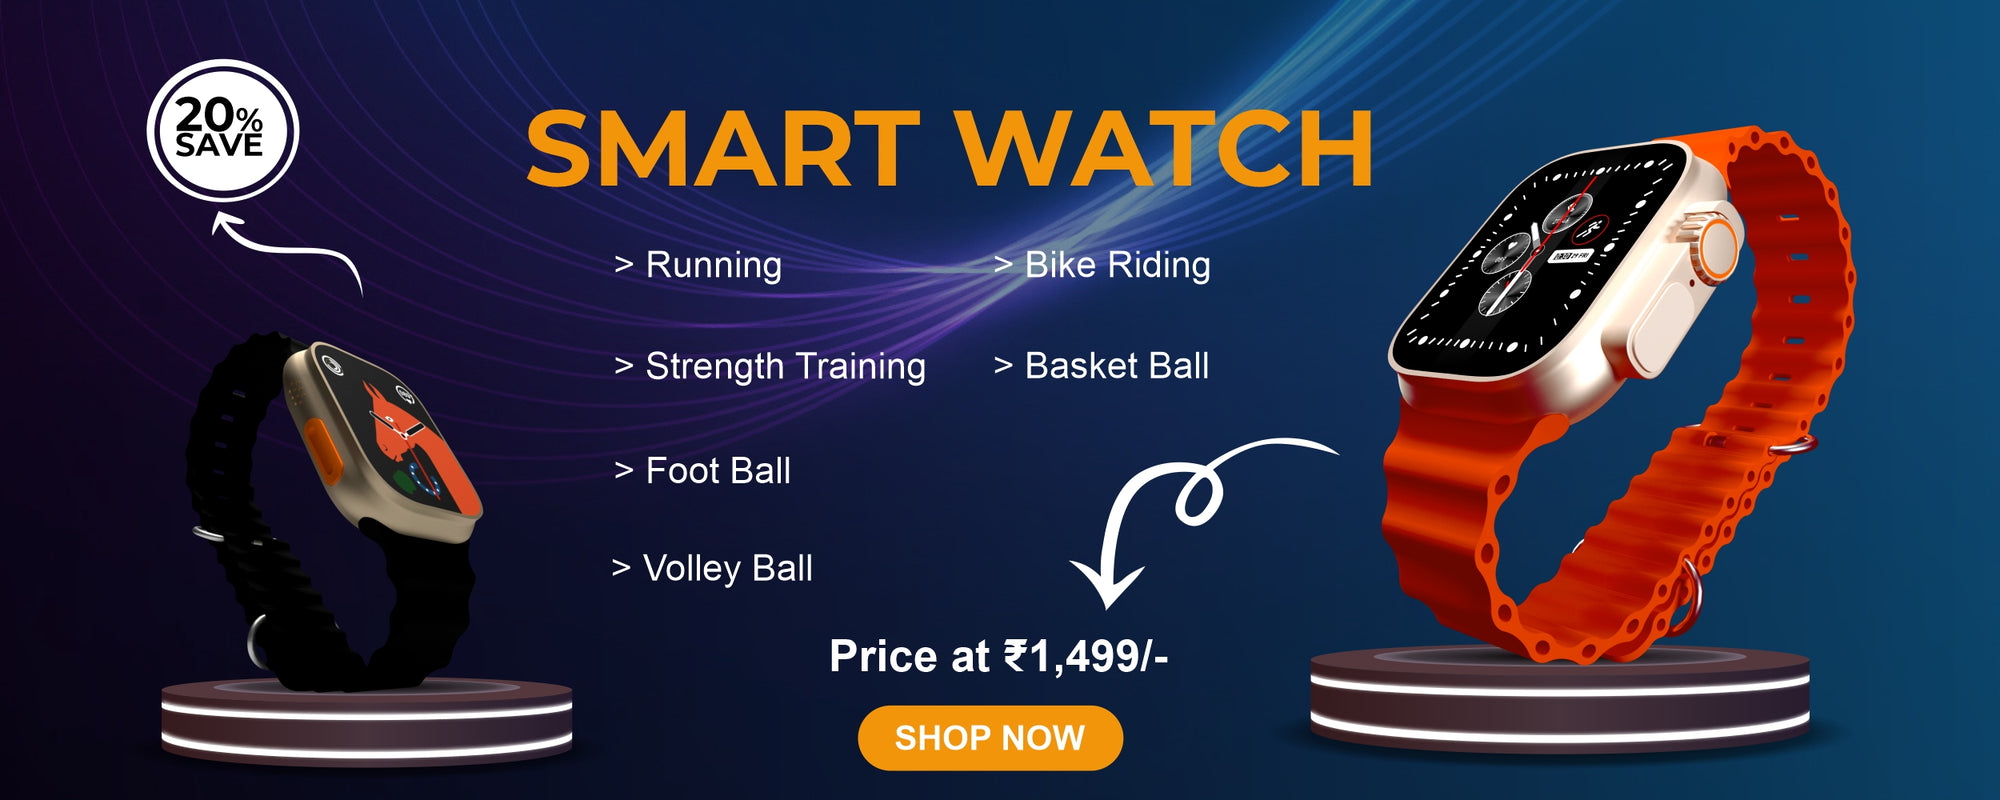 smart_watch